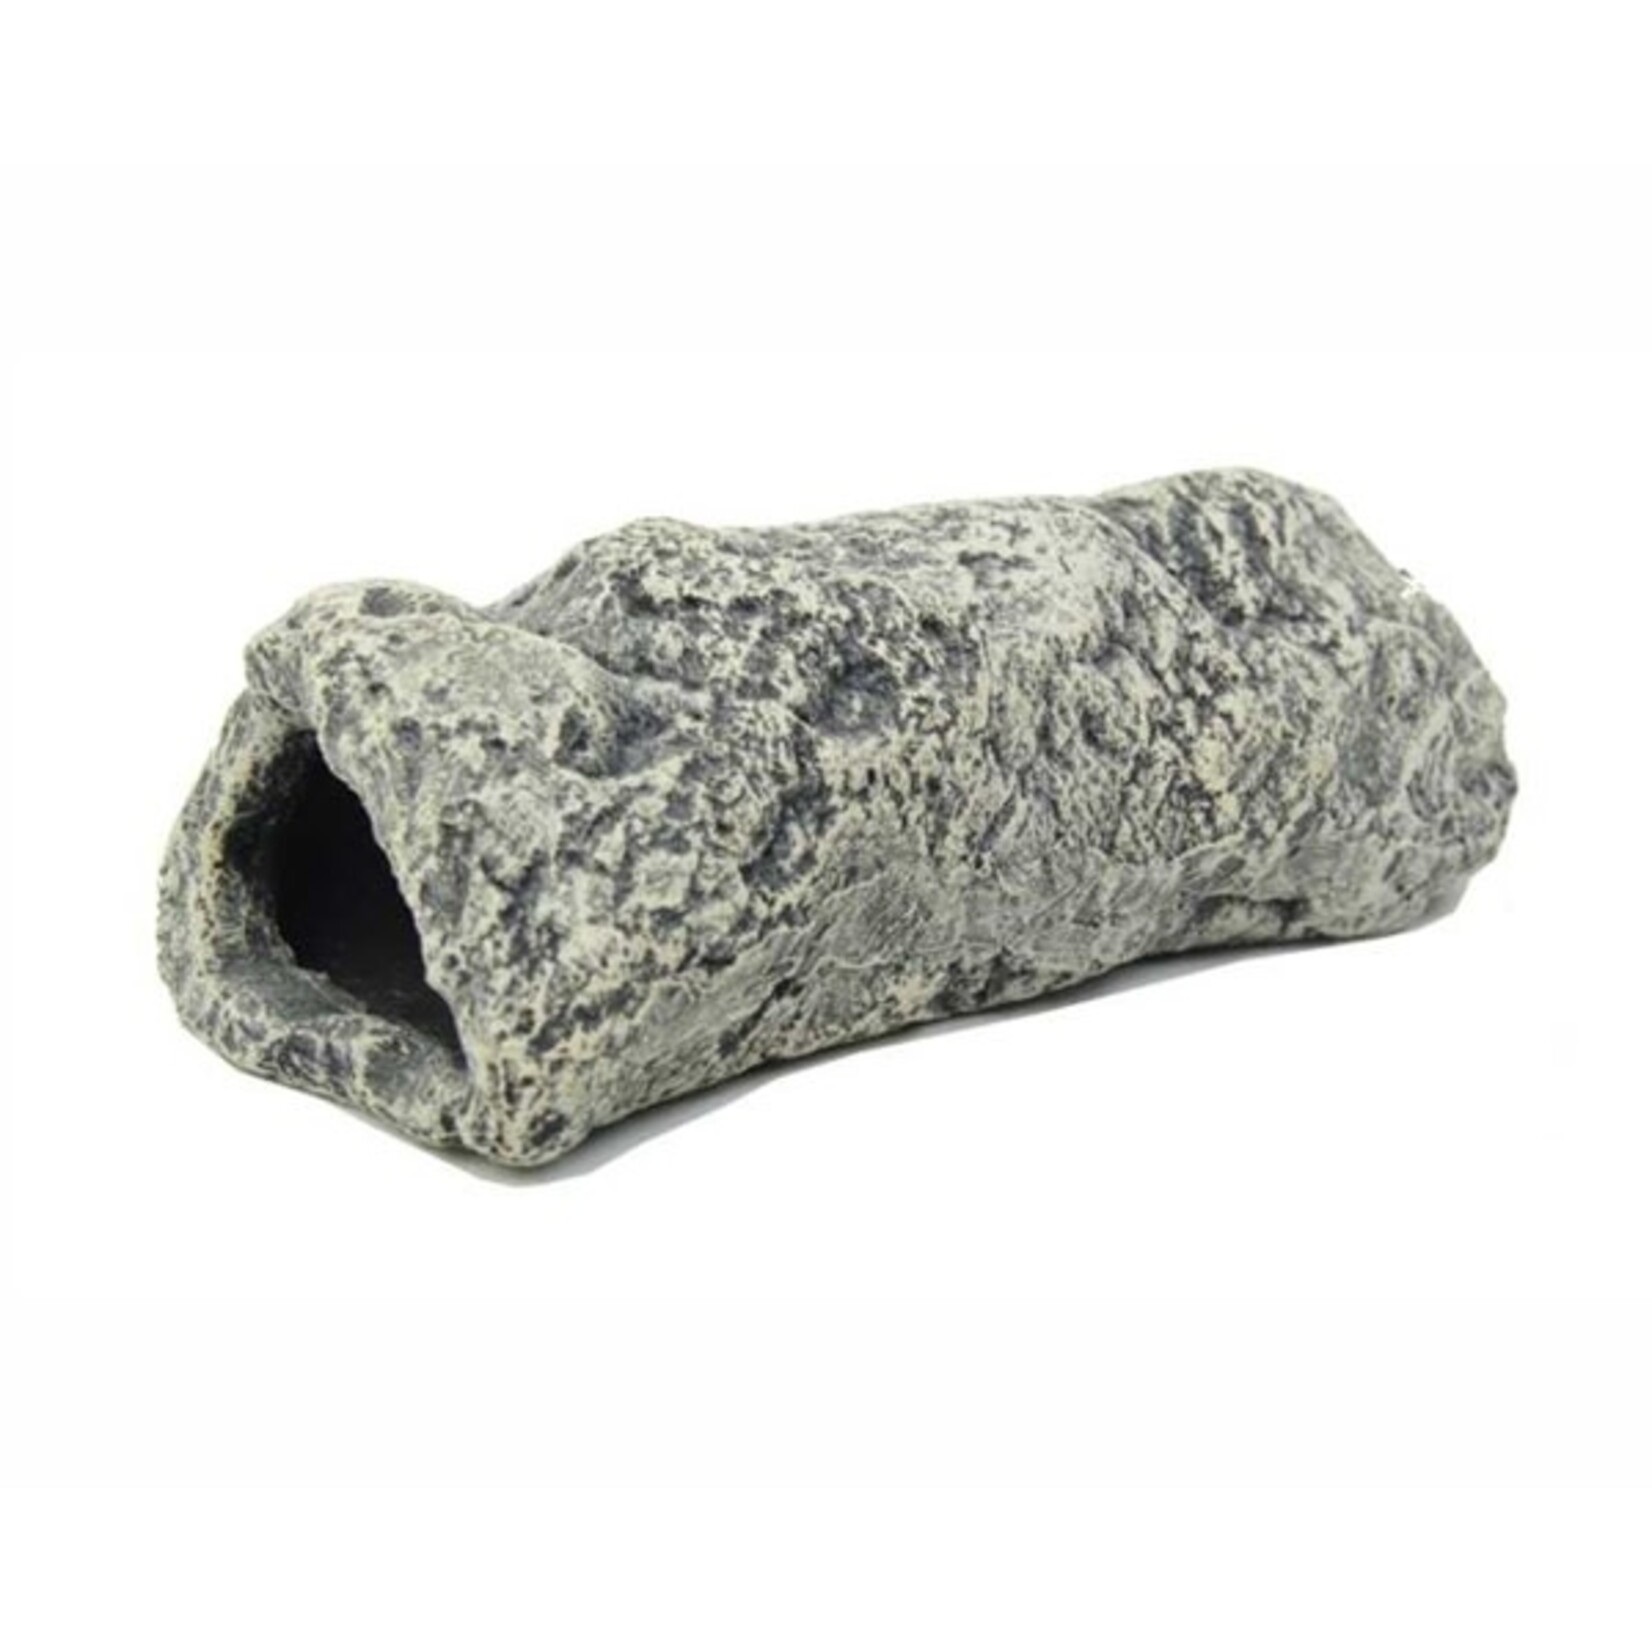 Catfish stone cave grey m 14x6x5 cm